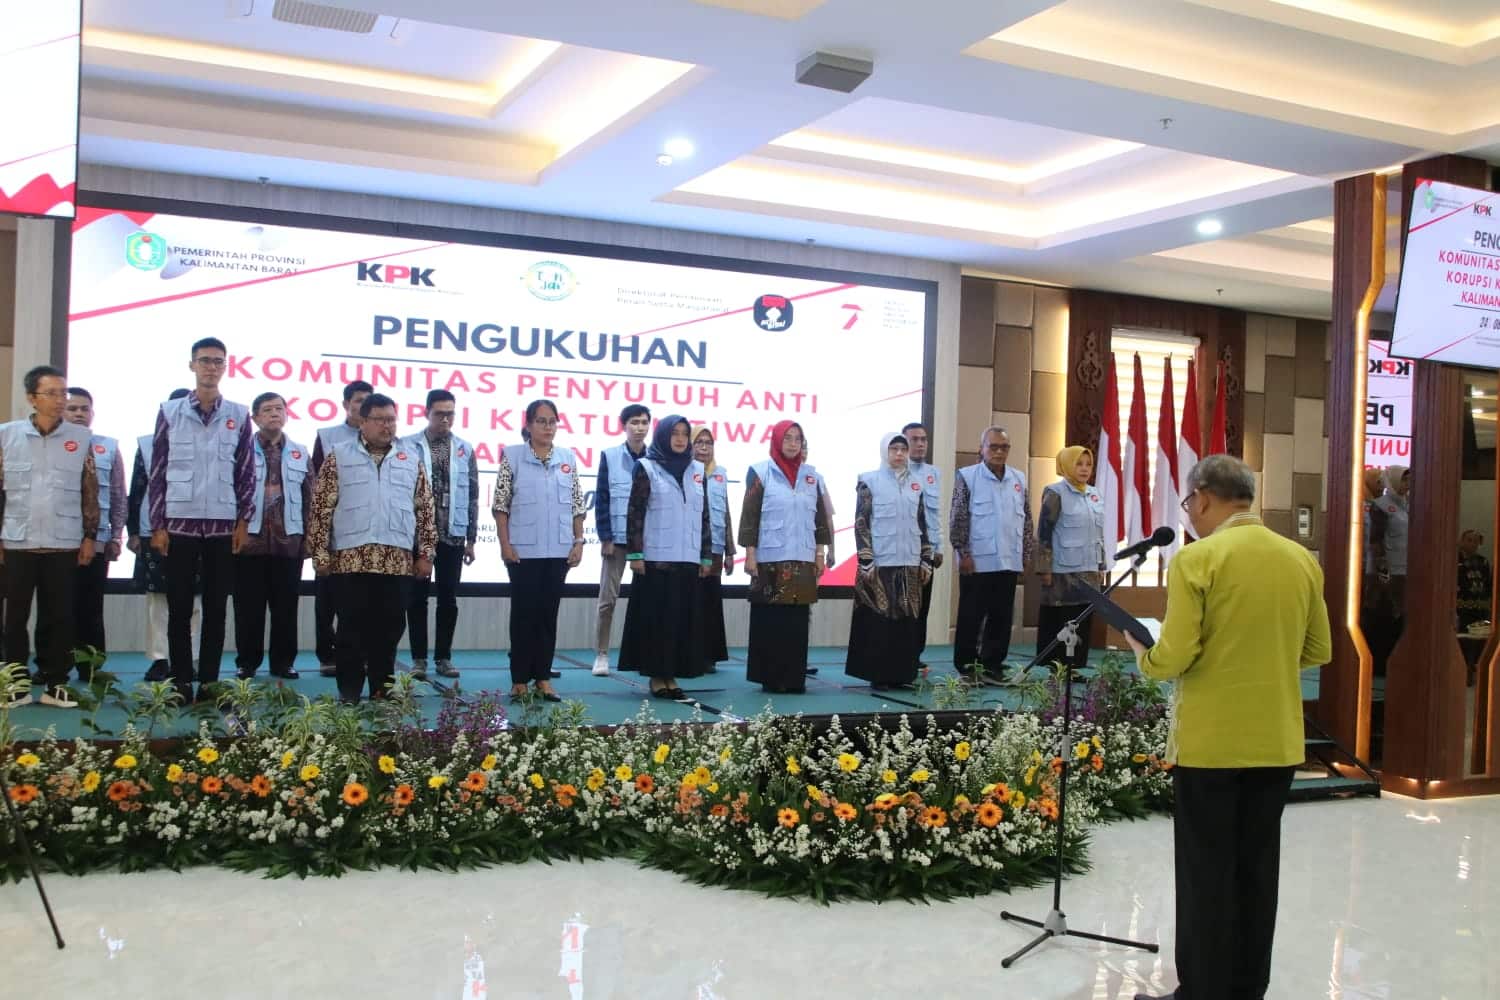 Pengukuhan Komunitas Penyuluh Anti Korupsi Khatulistiwa Kalbar (Tanjak) Kalimantan Barat. (Foto: Jauhari)